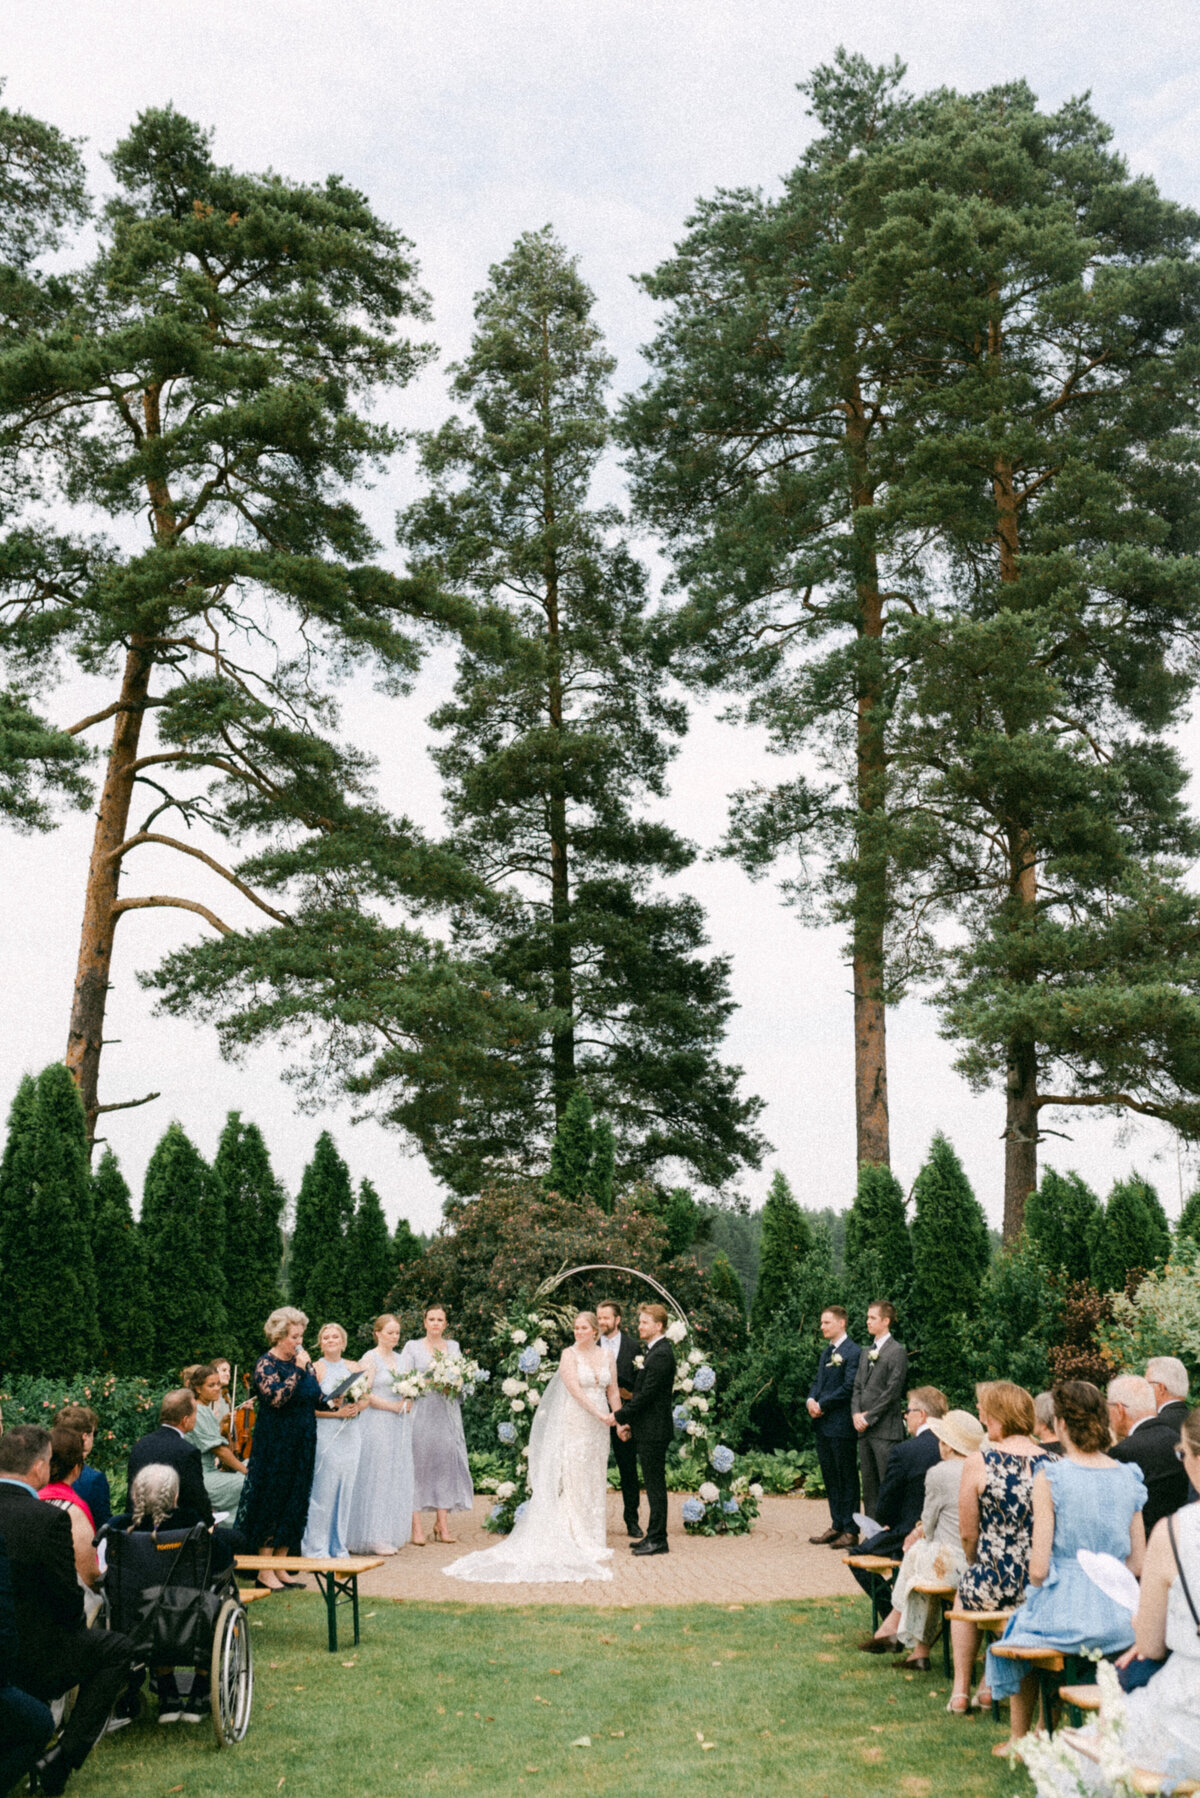 Wedding ceremony in the garden photographed by wedding photographer Hannika Gabrielsson.